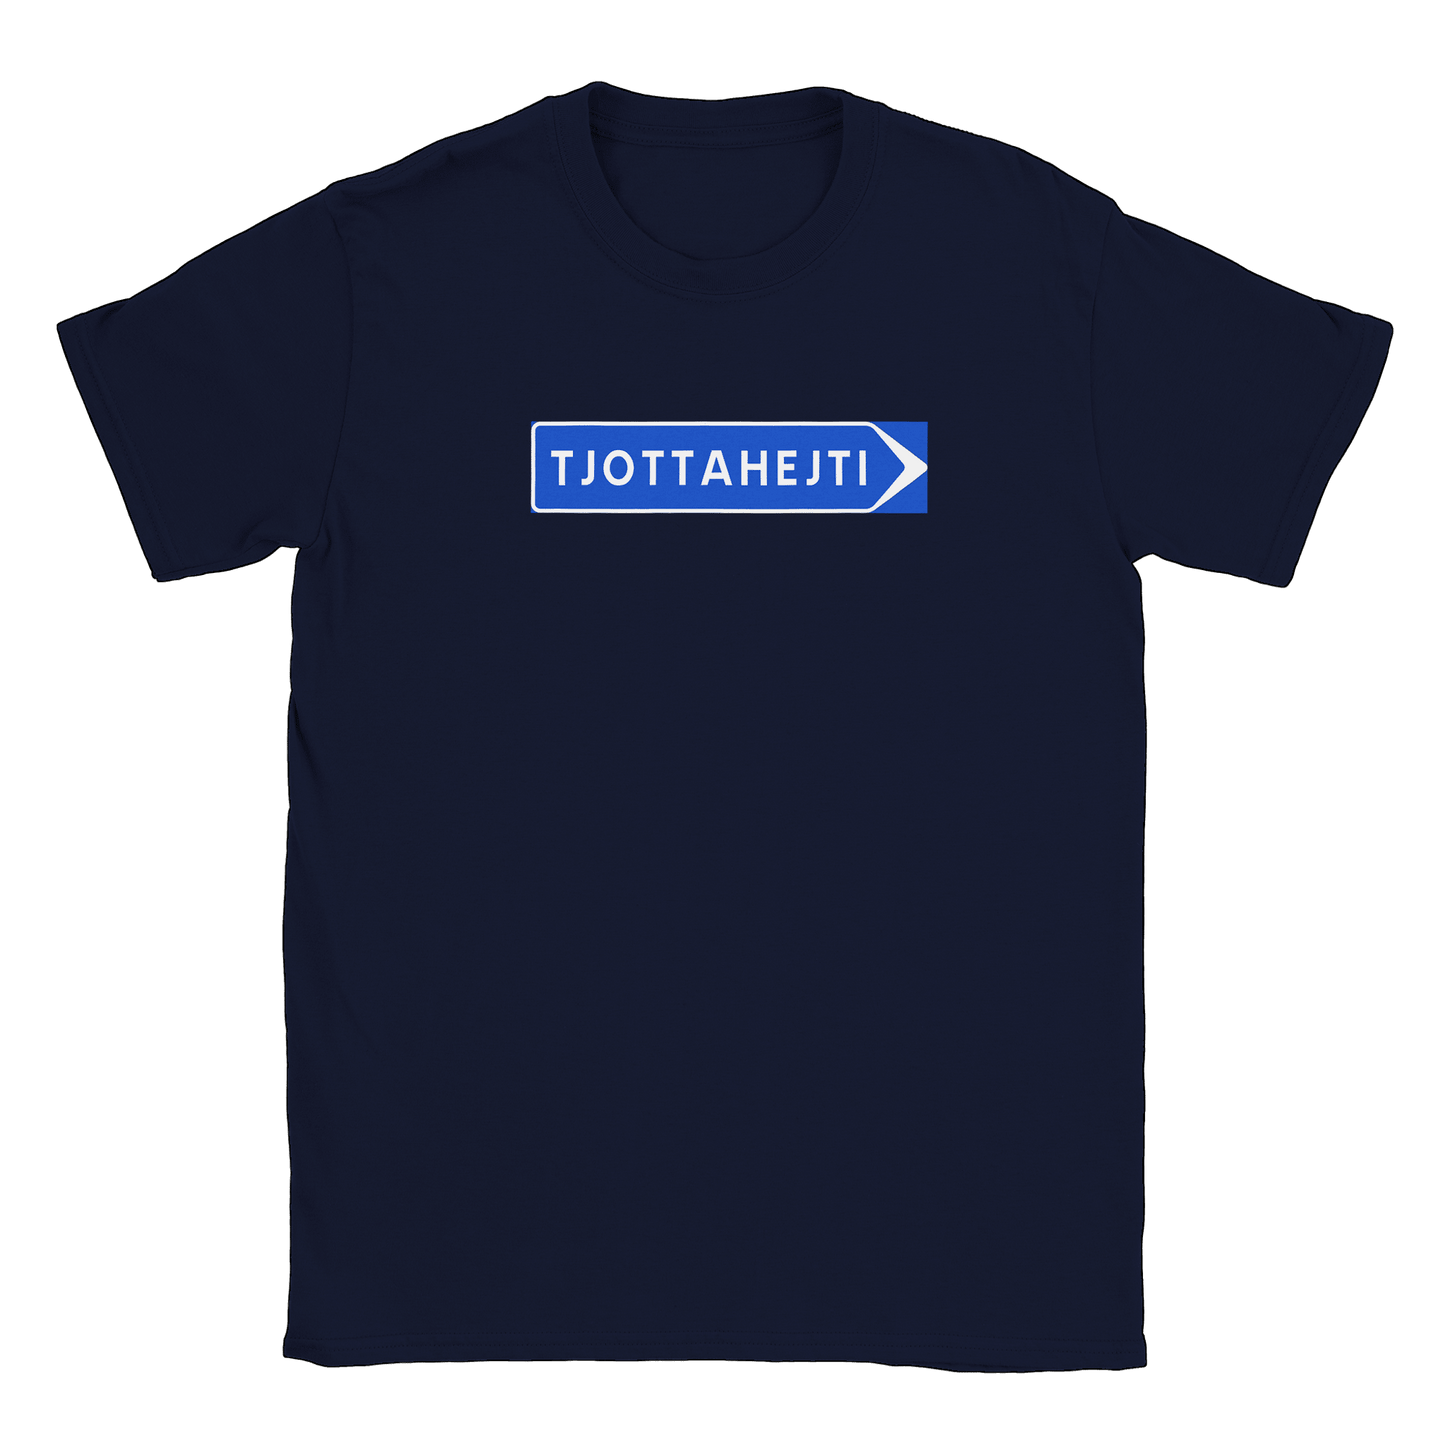 Tjottahejti skylt - T-shirt Navy